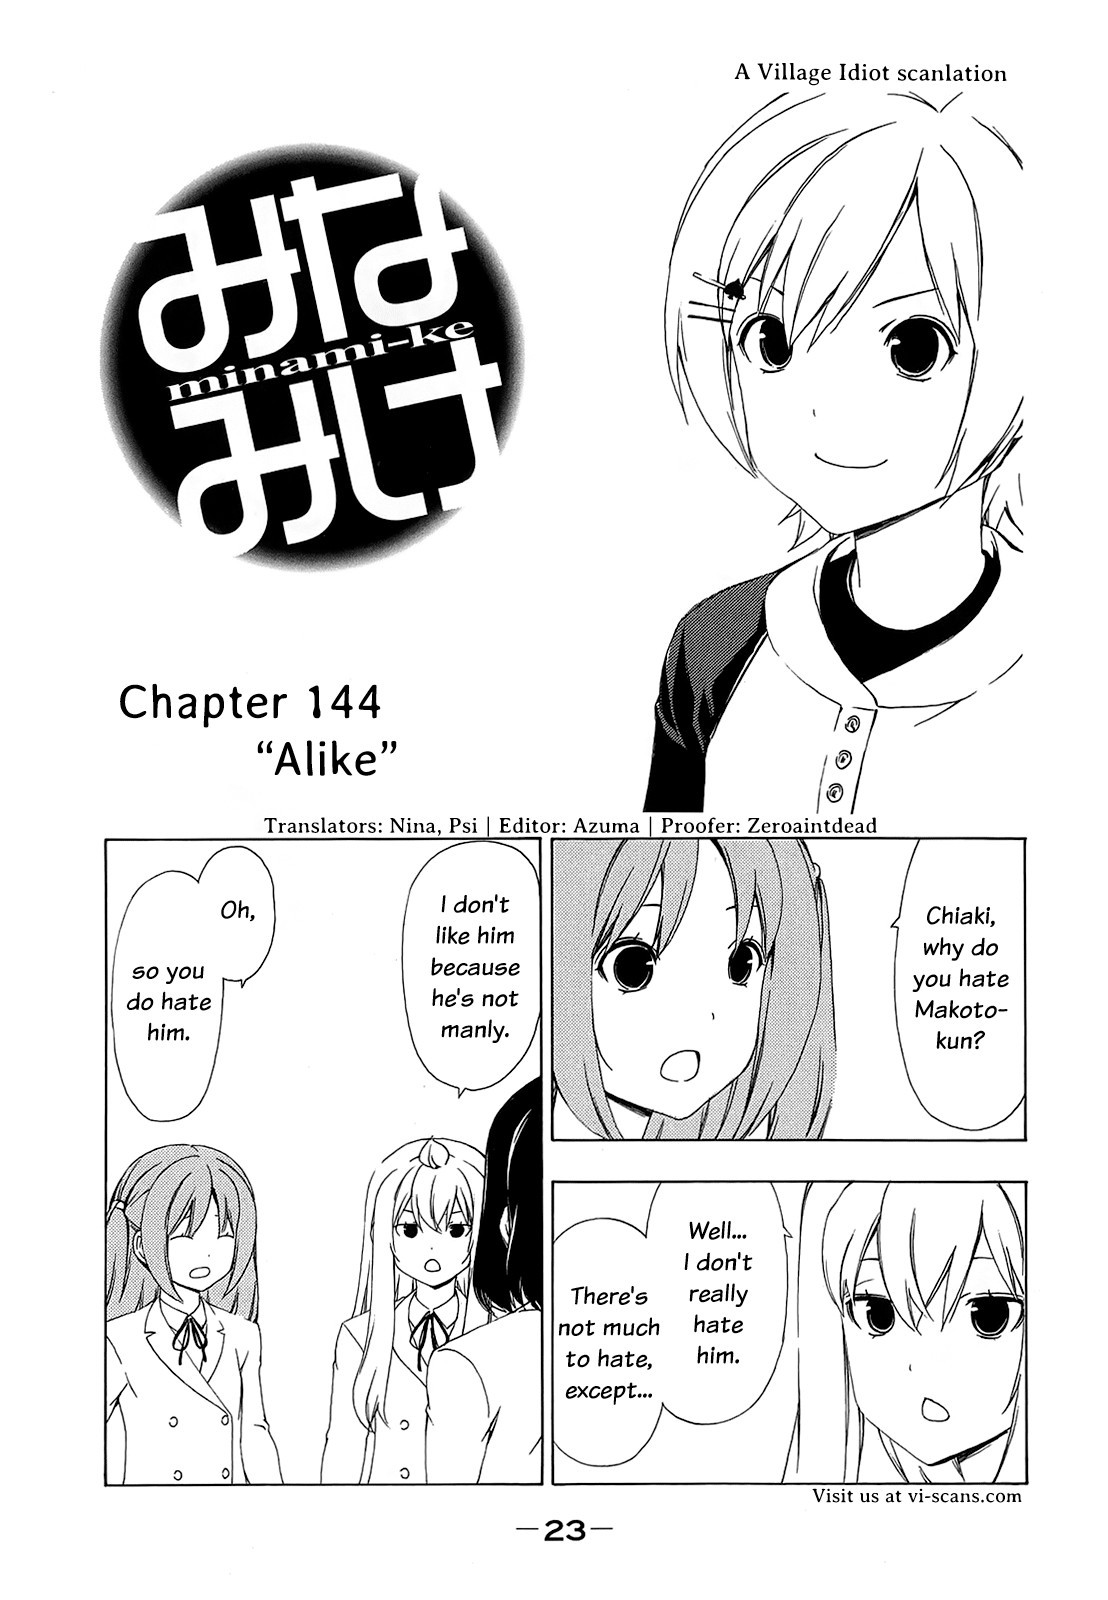 Minami-ke chapter 144 page 2